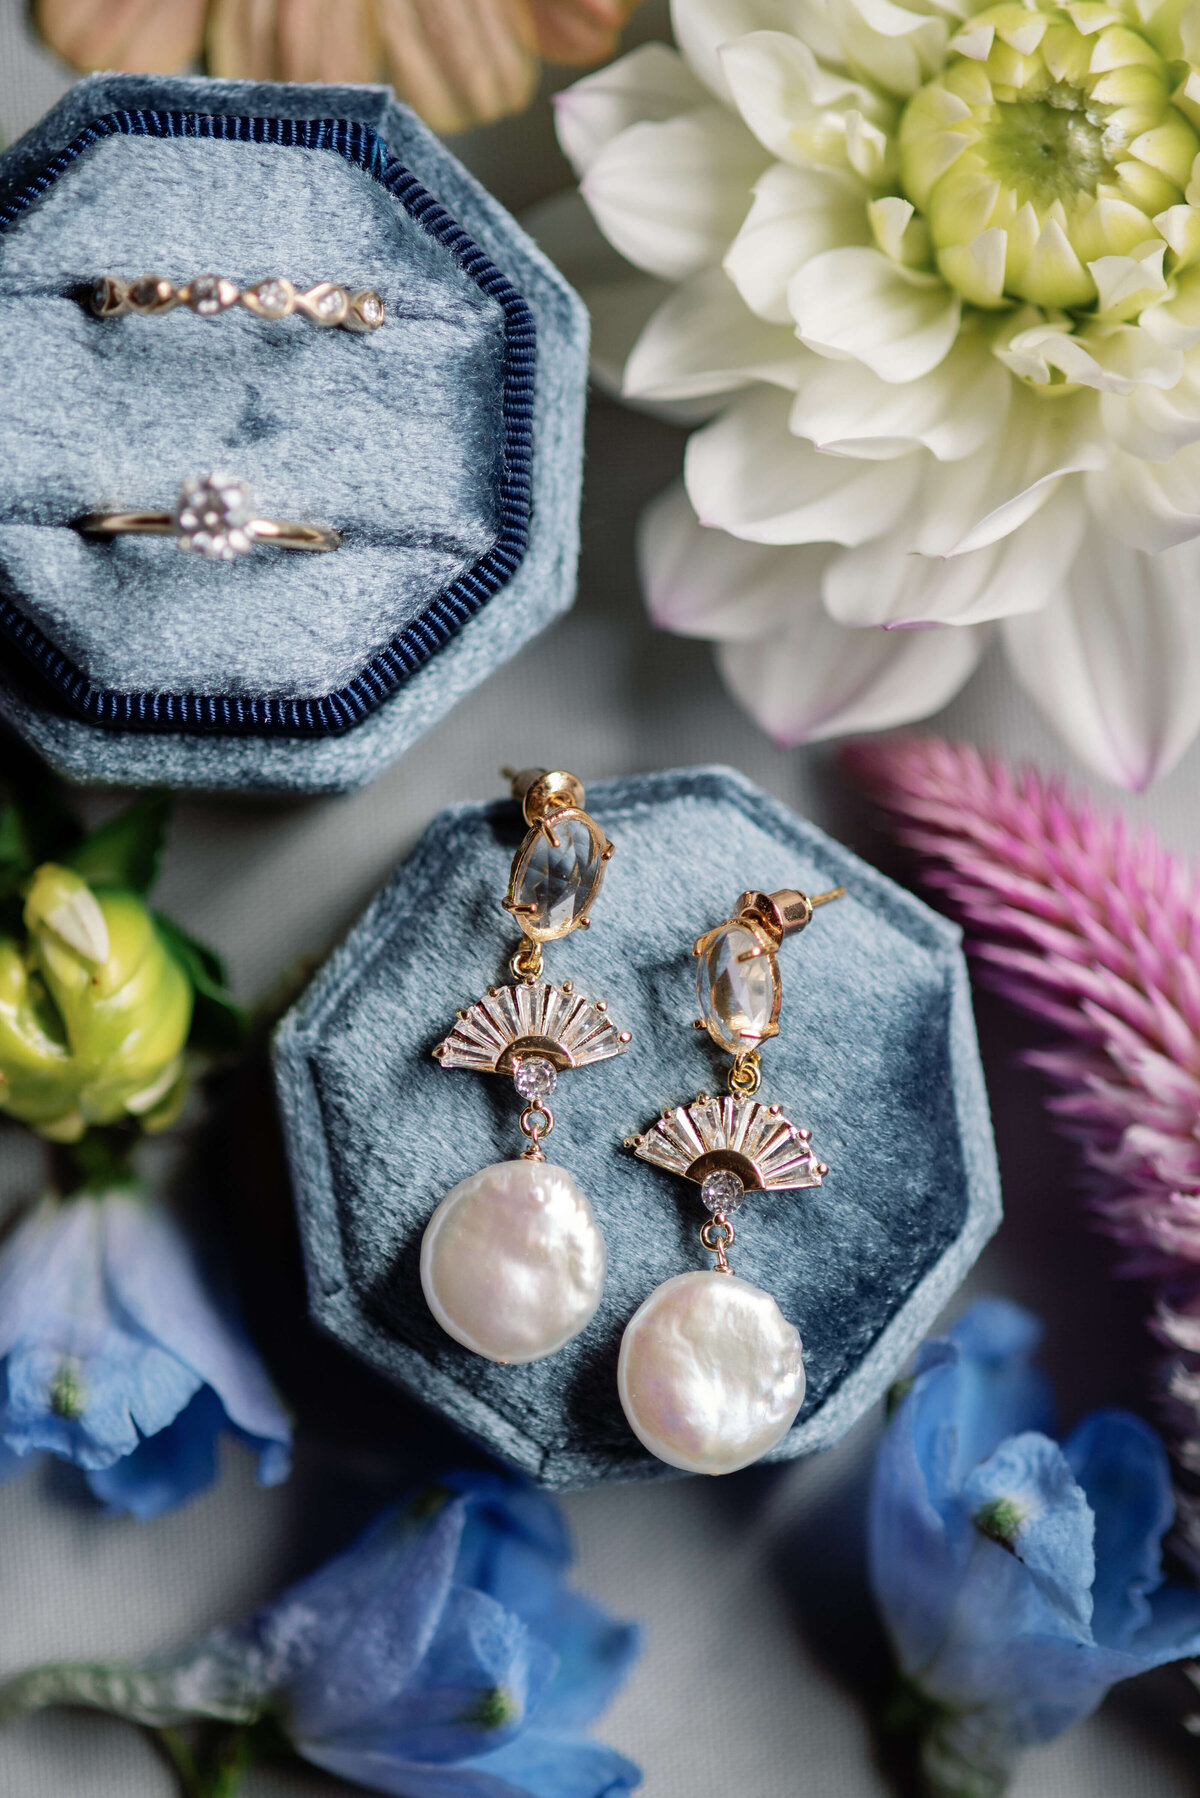 Pearl earrings at Oak Island Resort wedding, Nova Scotia